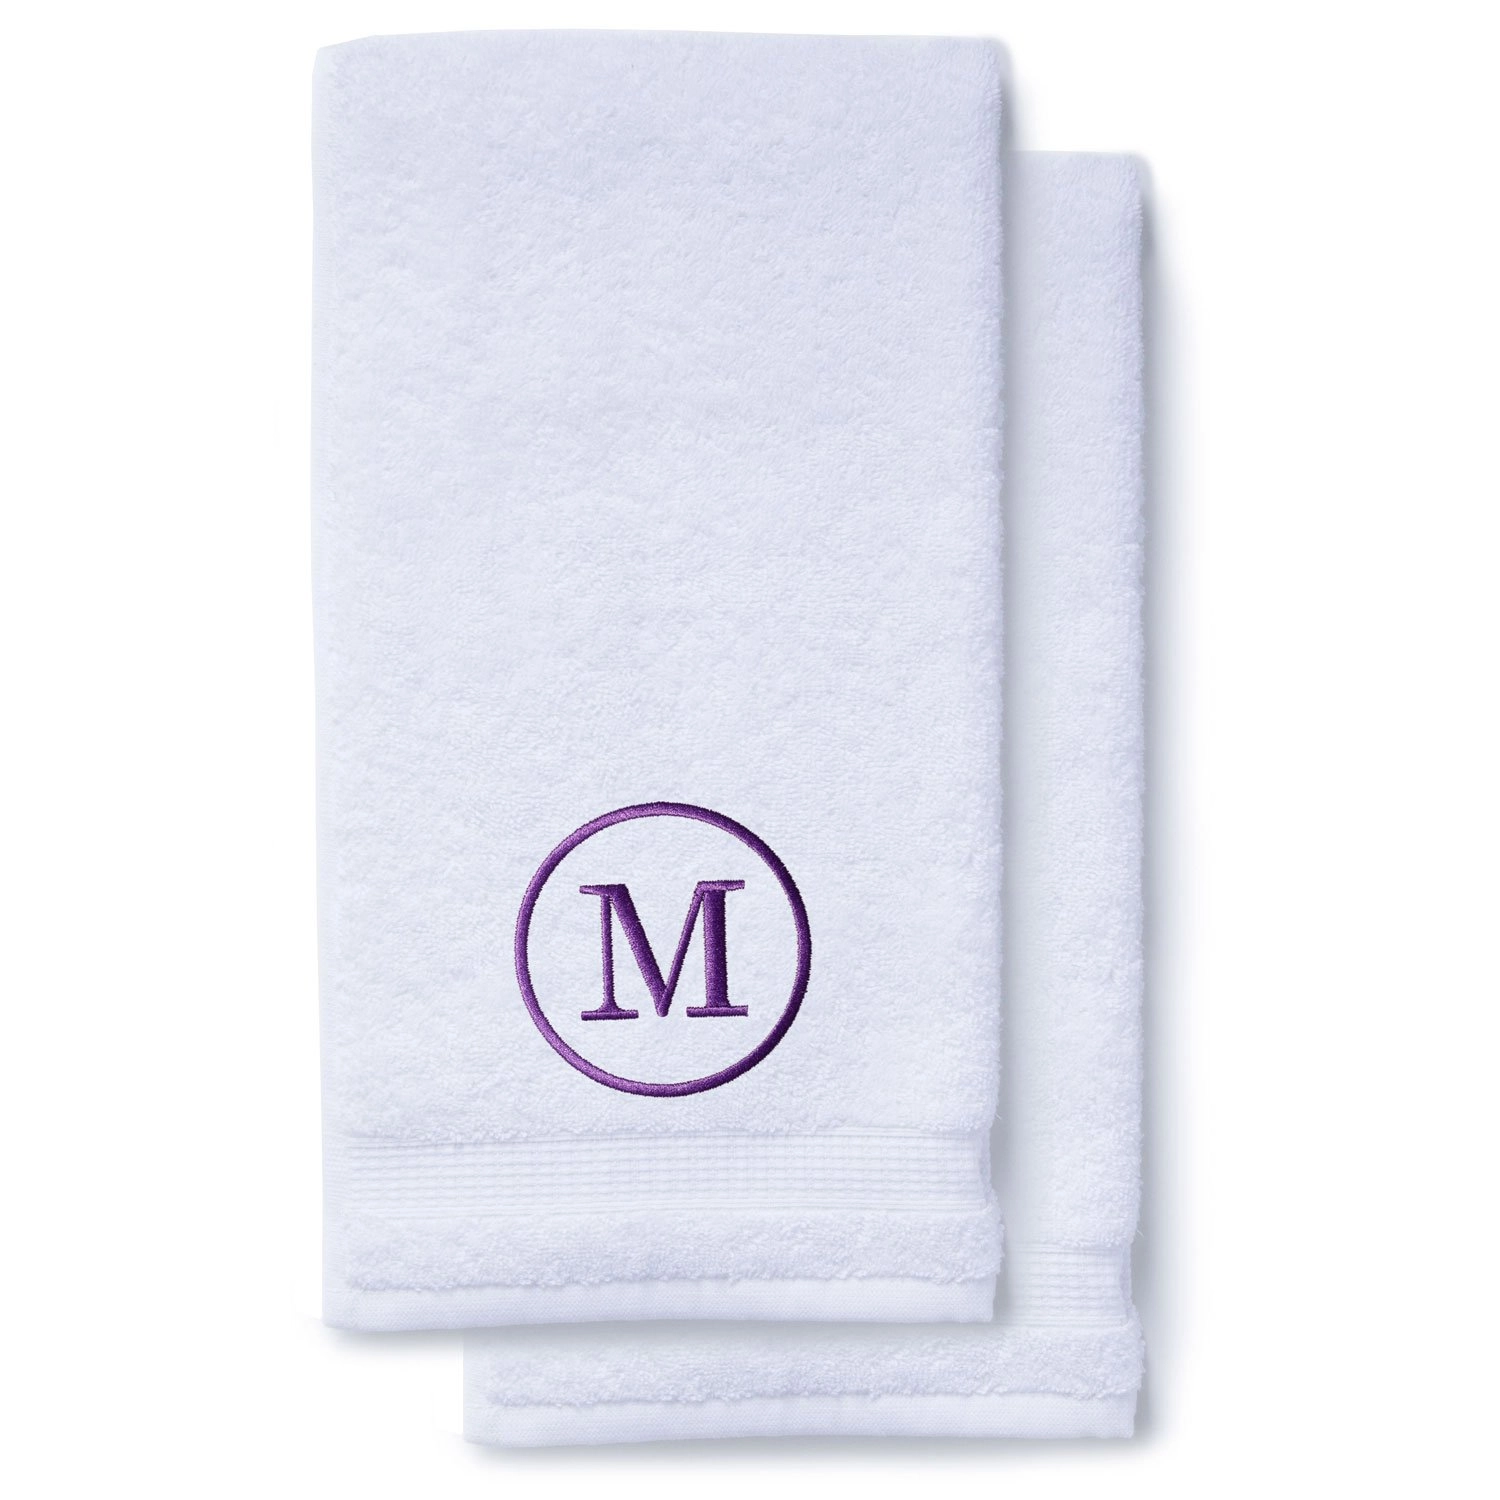 https://robemart.com/images/thumbnails/detailed/7/M-Purple-stacked-Monogrammed-Hand-Towels.webp